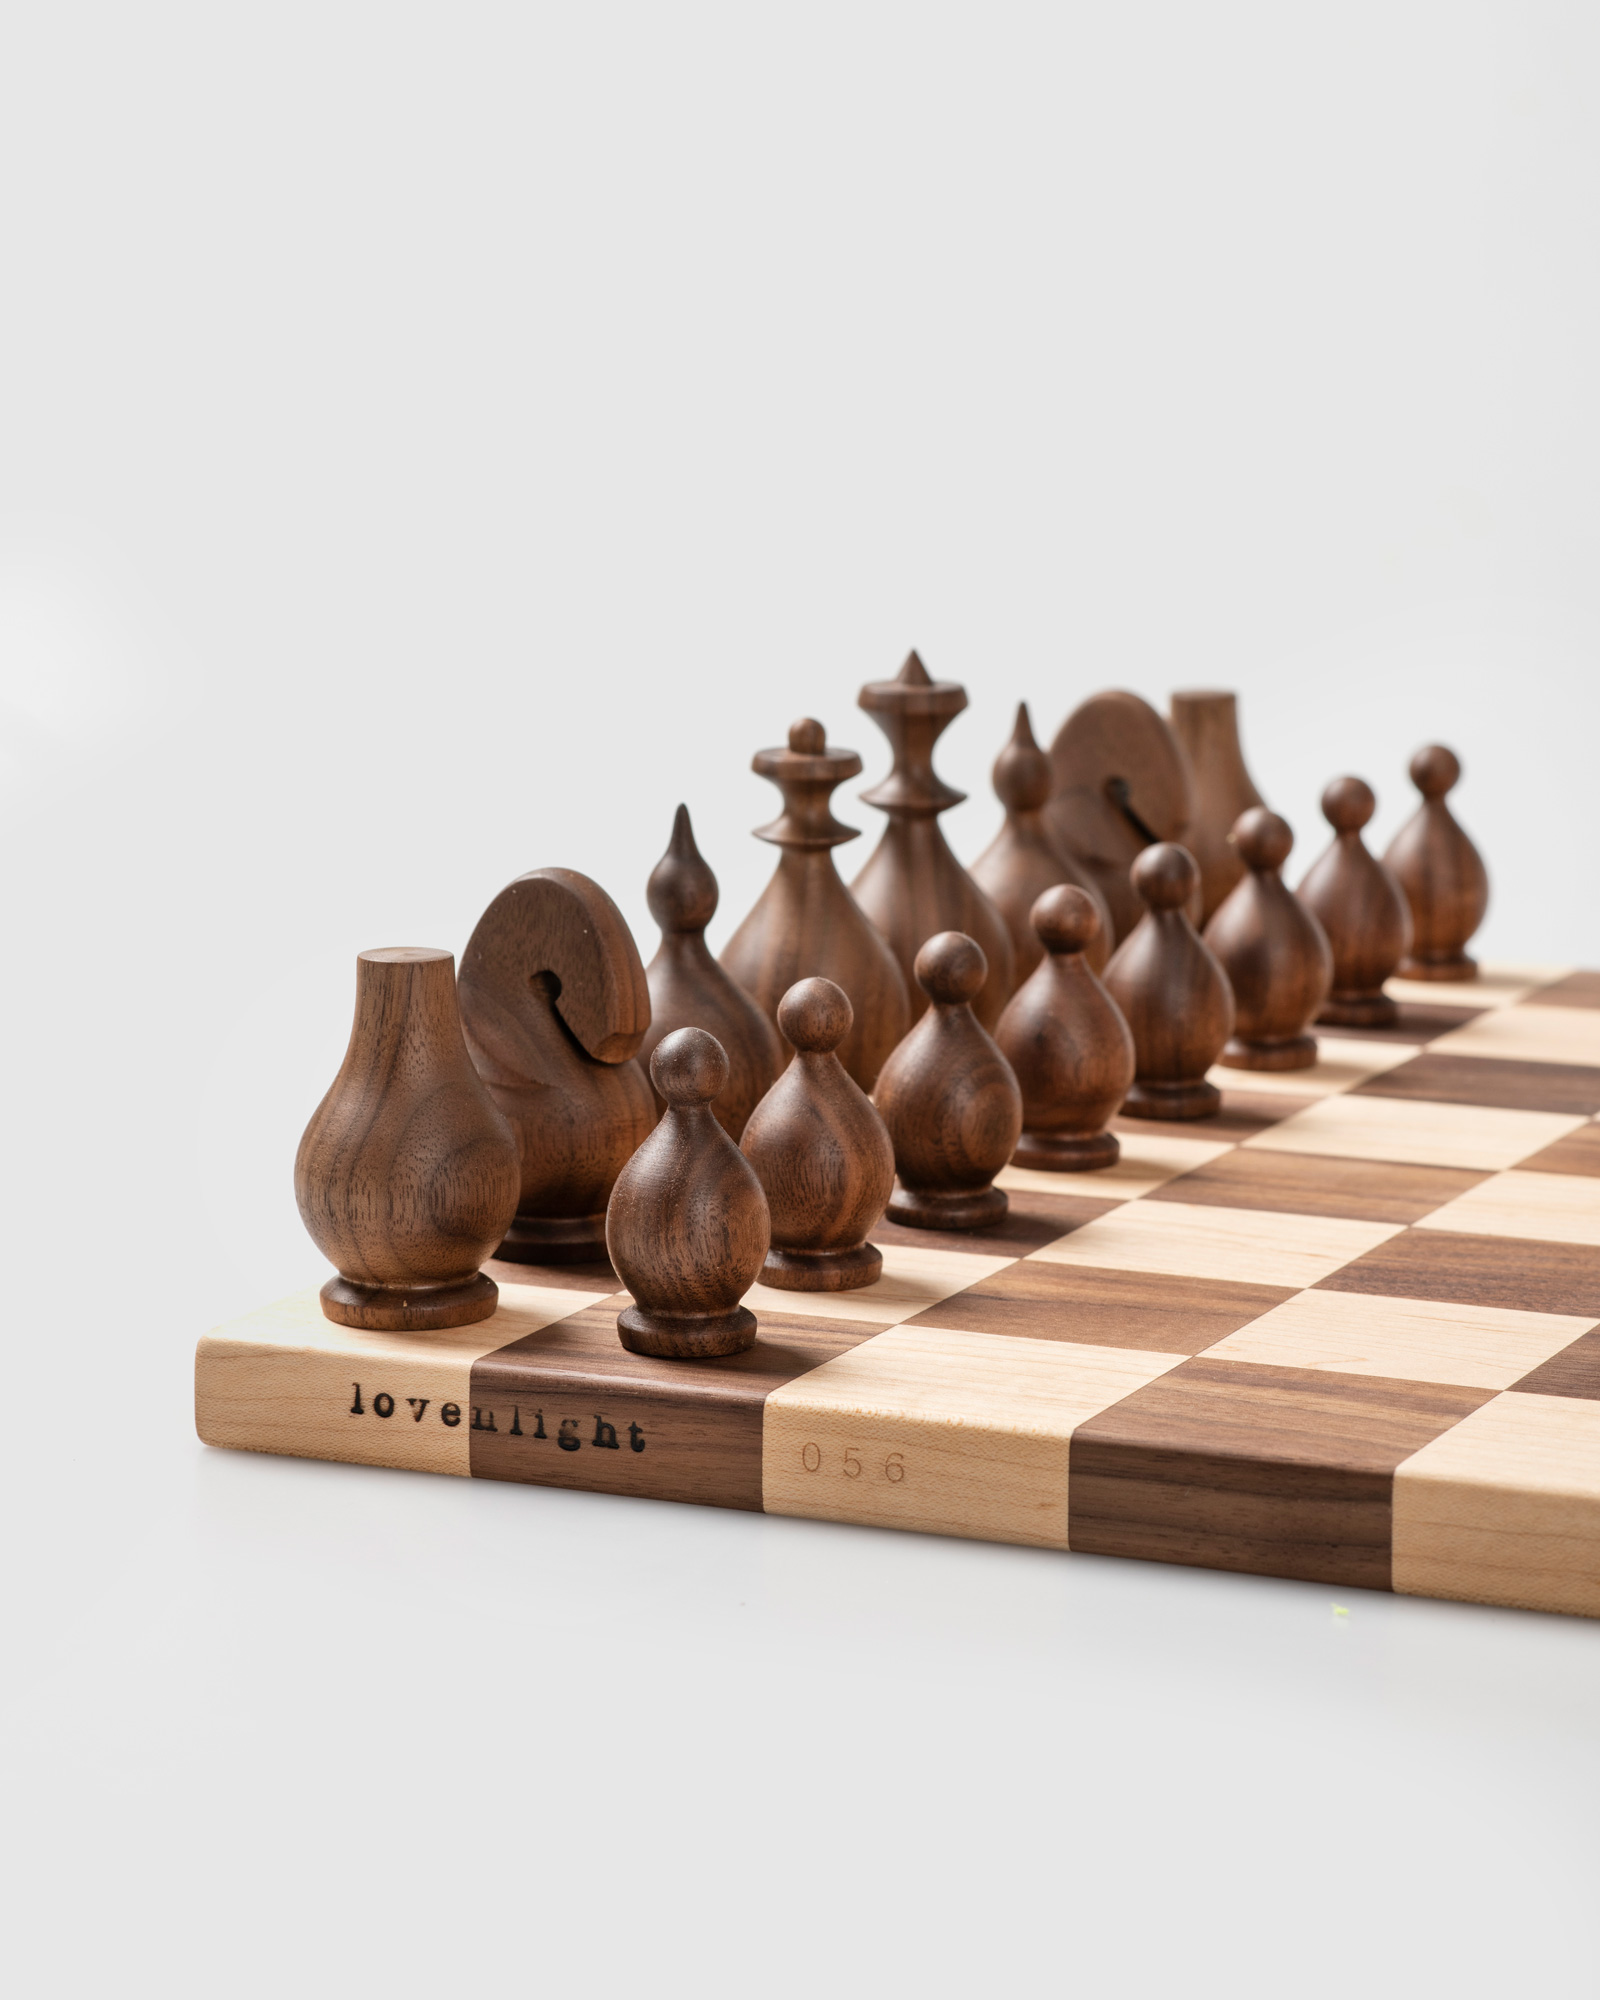 lovenlight original wooden chess set